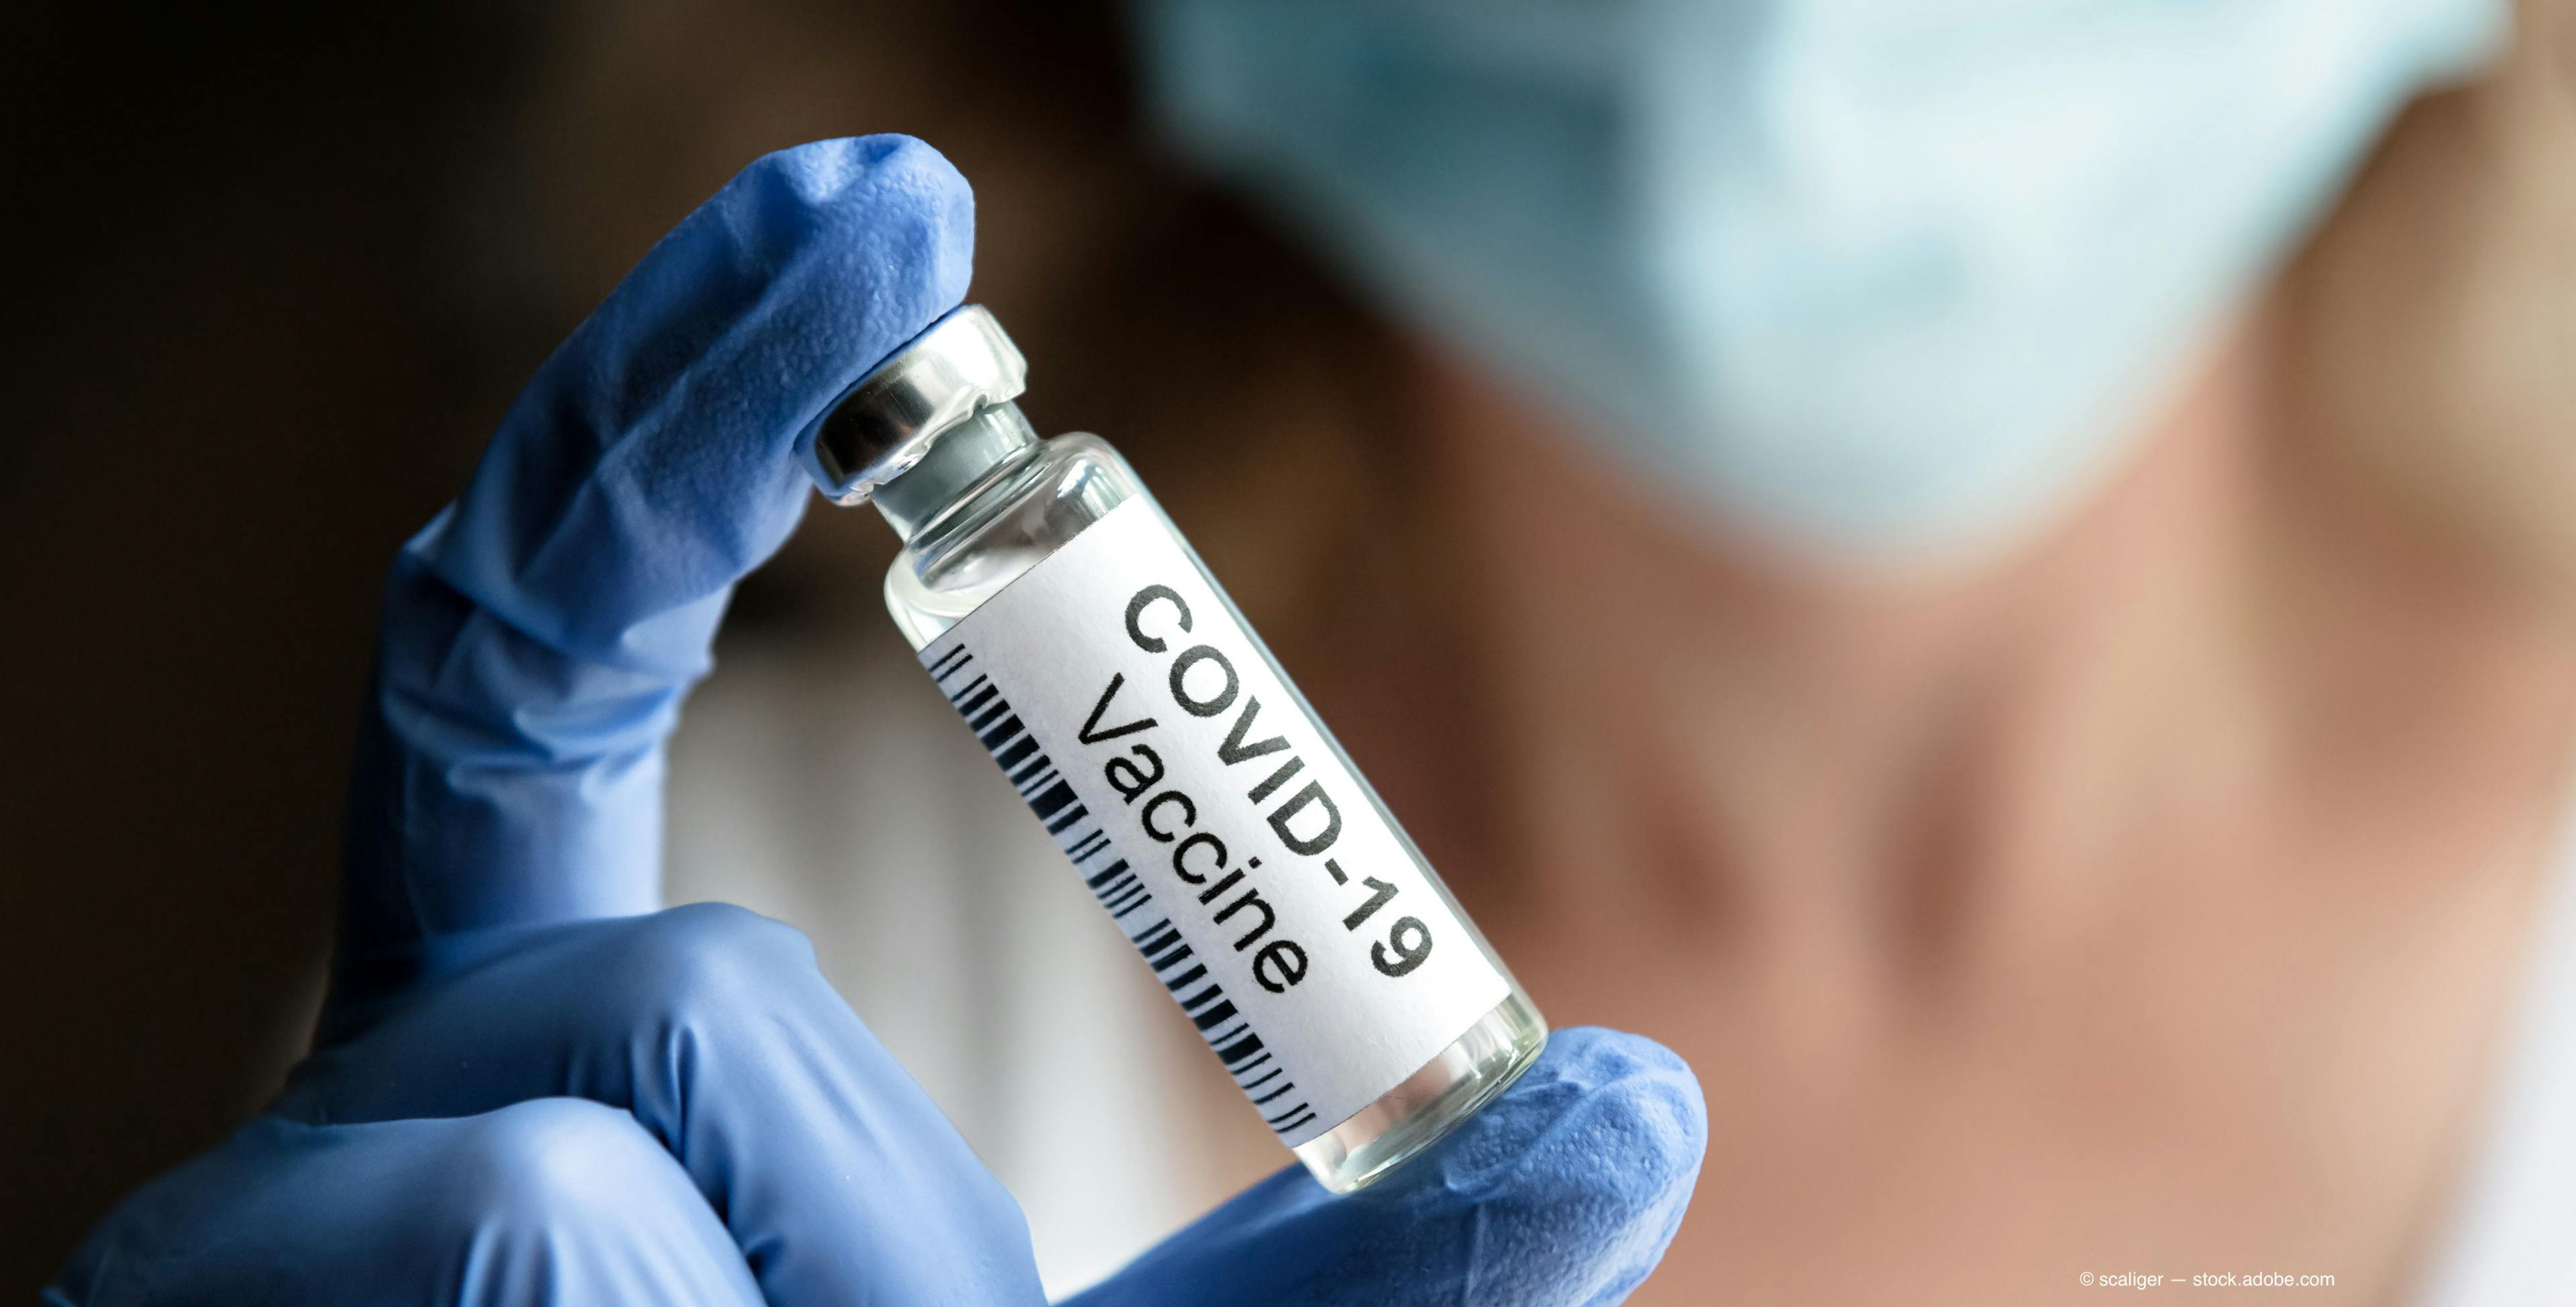 COVID-19 vaccinations underway across US